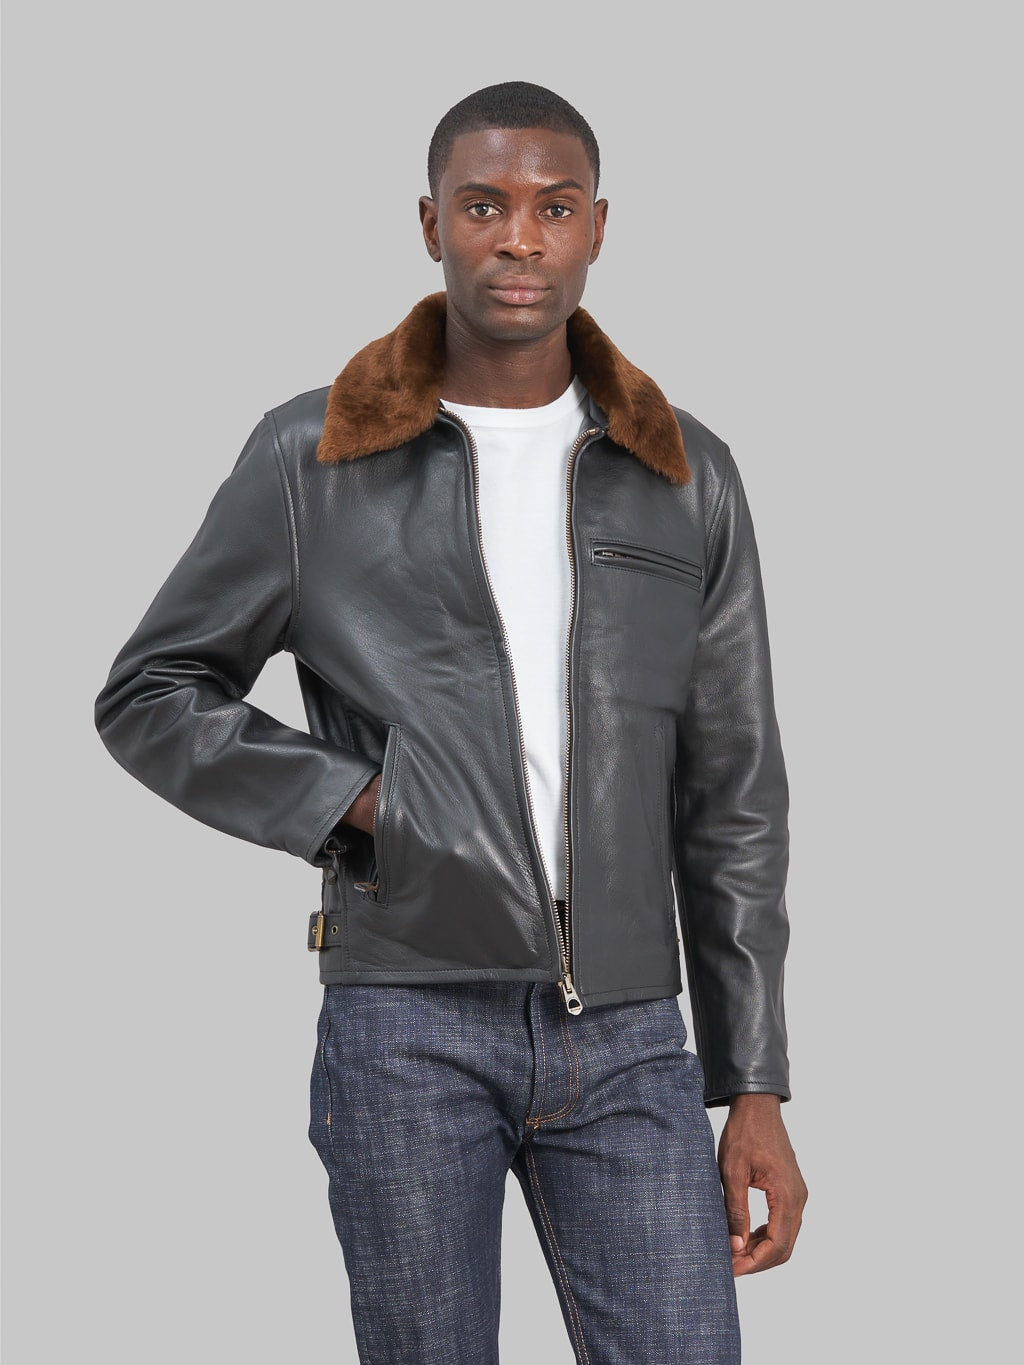 Shangri-La Heritage "Varenne" Fur Collar Black Leather Jacket